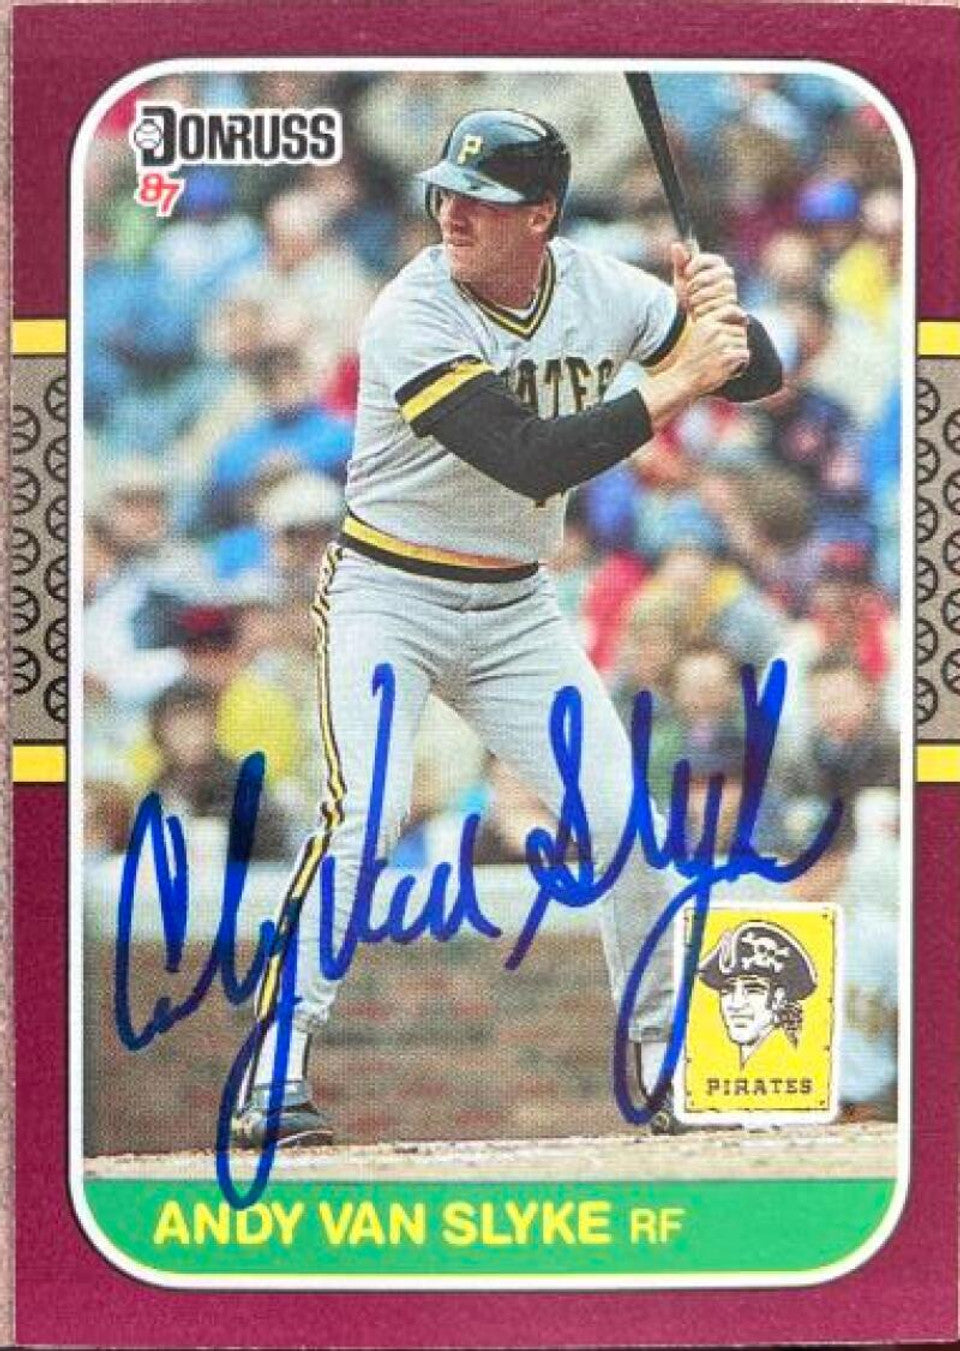 Andy Van Slyke Signed 1987 Donruss Opening Day Baseball Card - Pittsburgh Pirates